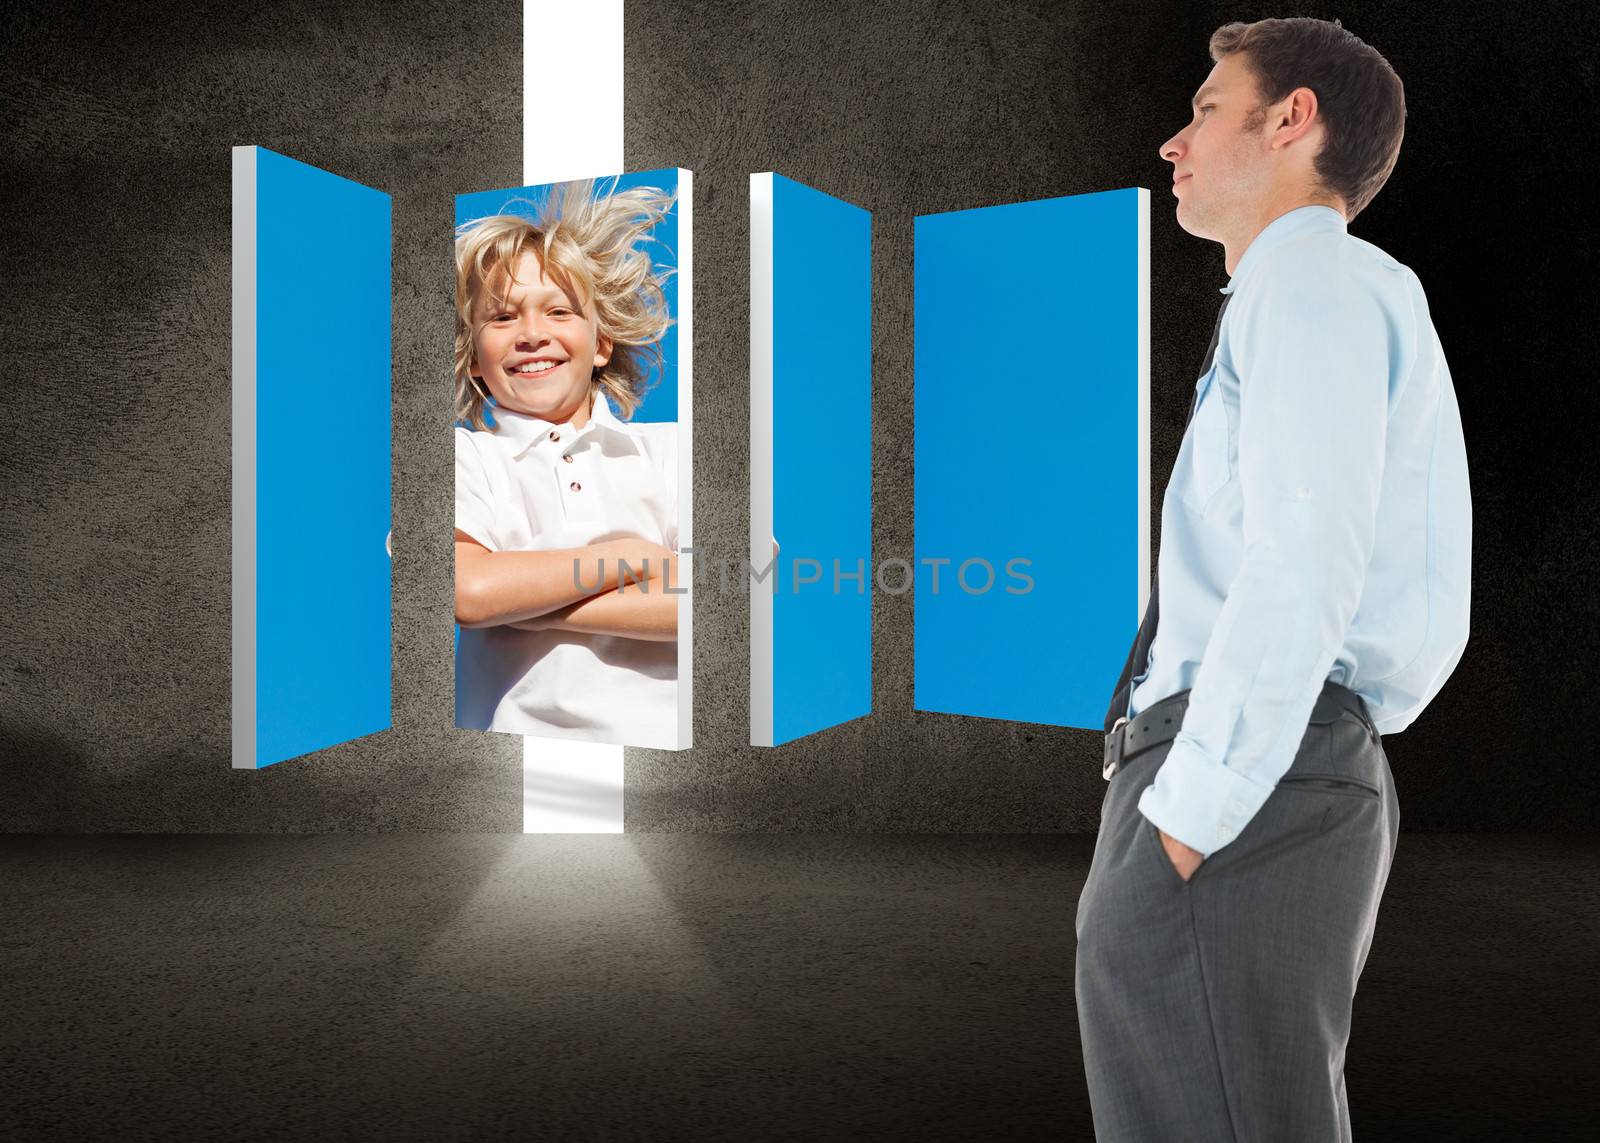 Serious businessman standing with hand in pocket against door in dark room